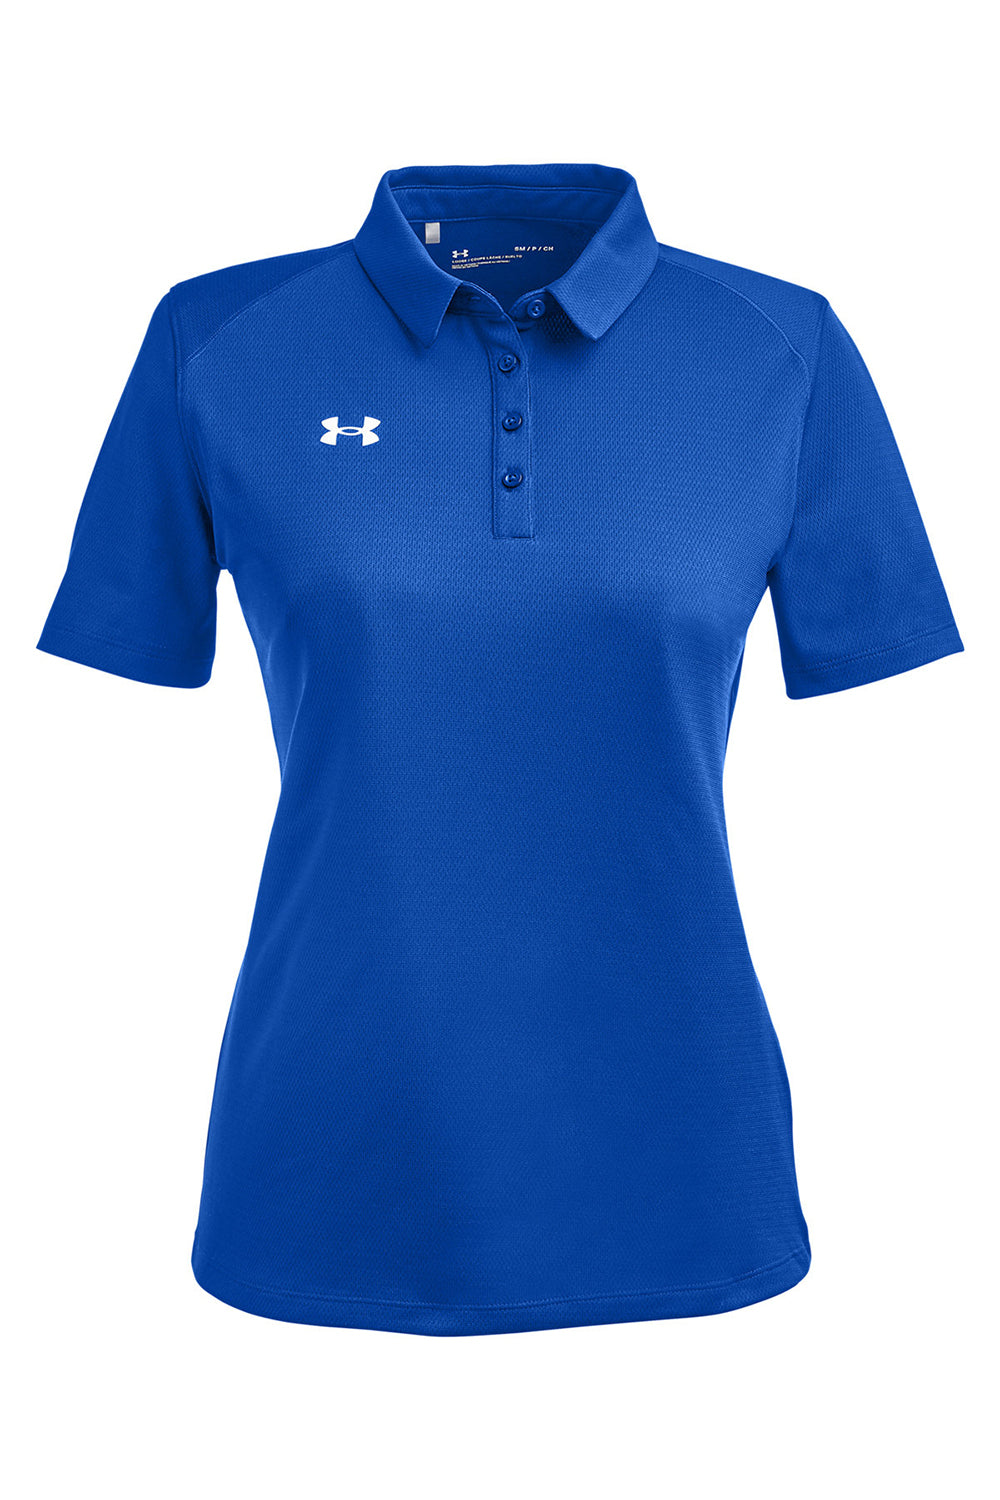 Under Armour 1370431 Womens Tech Moisture Wicking Short Sleeve Polo Shirt Royal Blue Flat Front